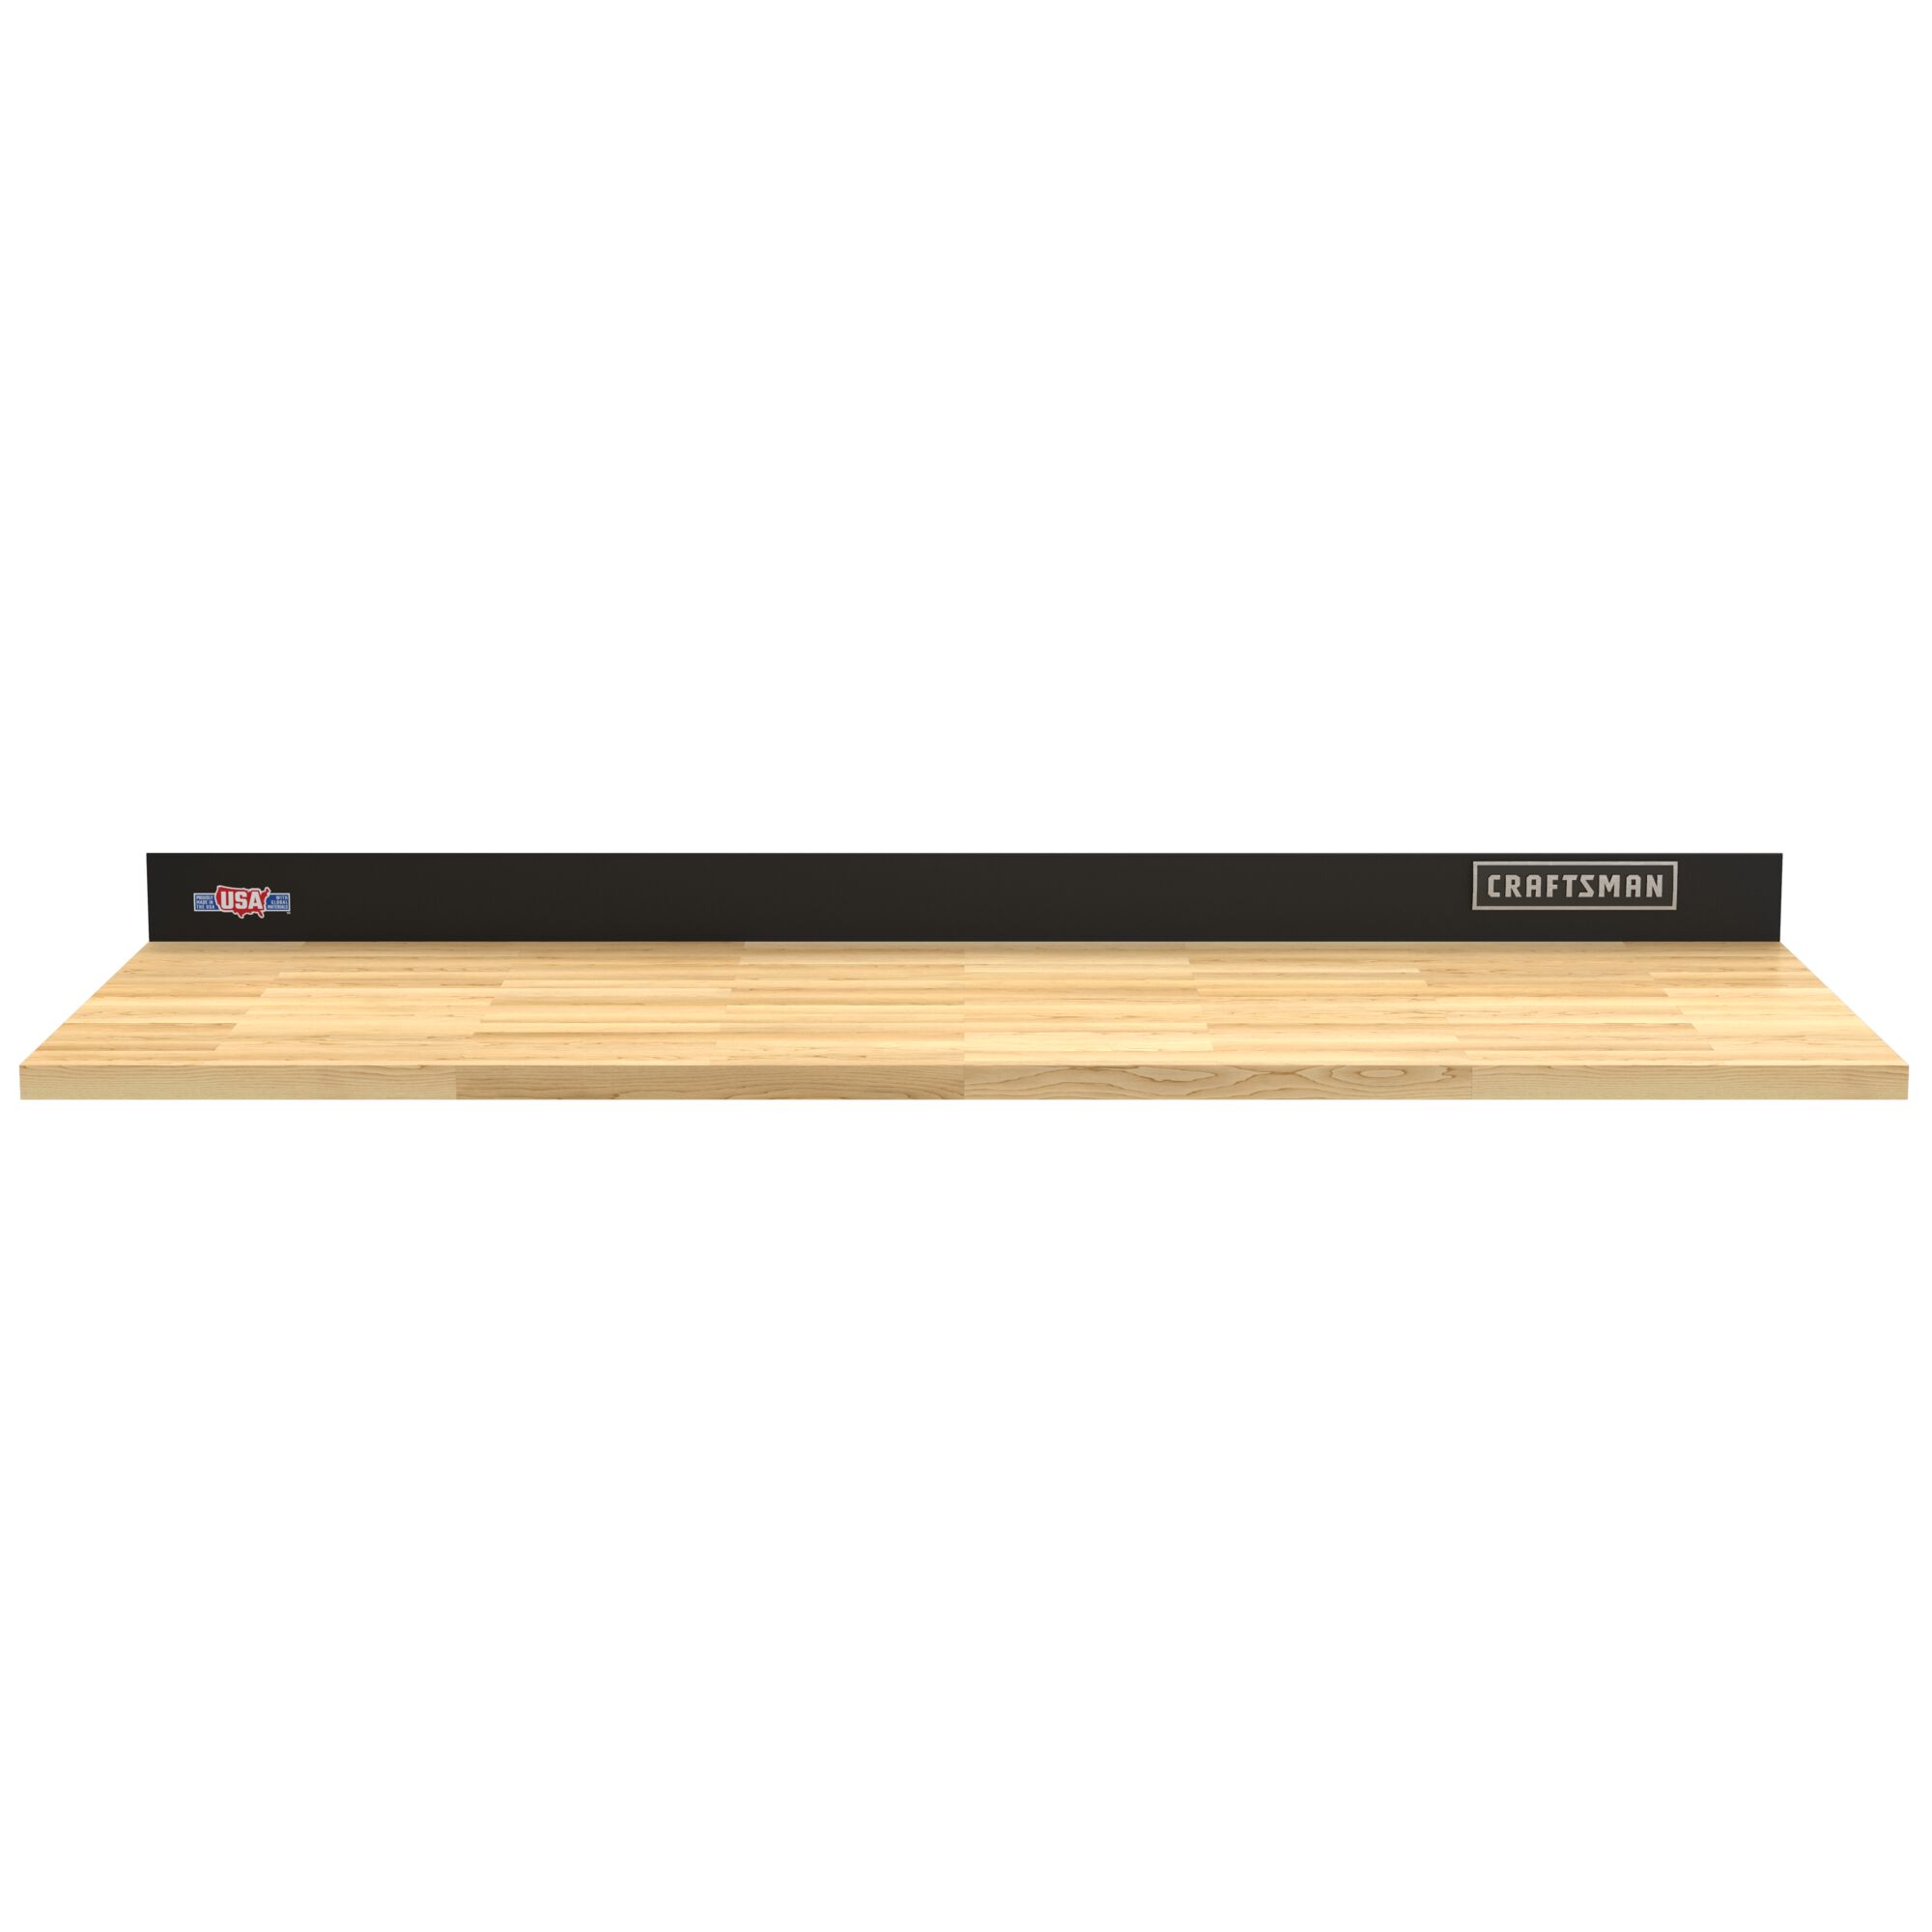 Wood Craftsman Plank layed flat straightforward